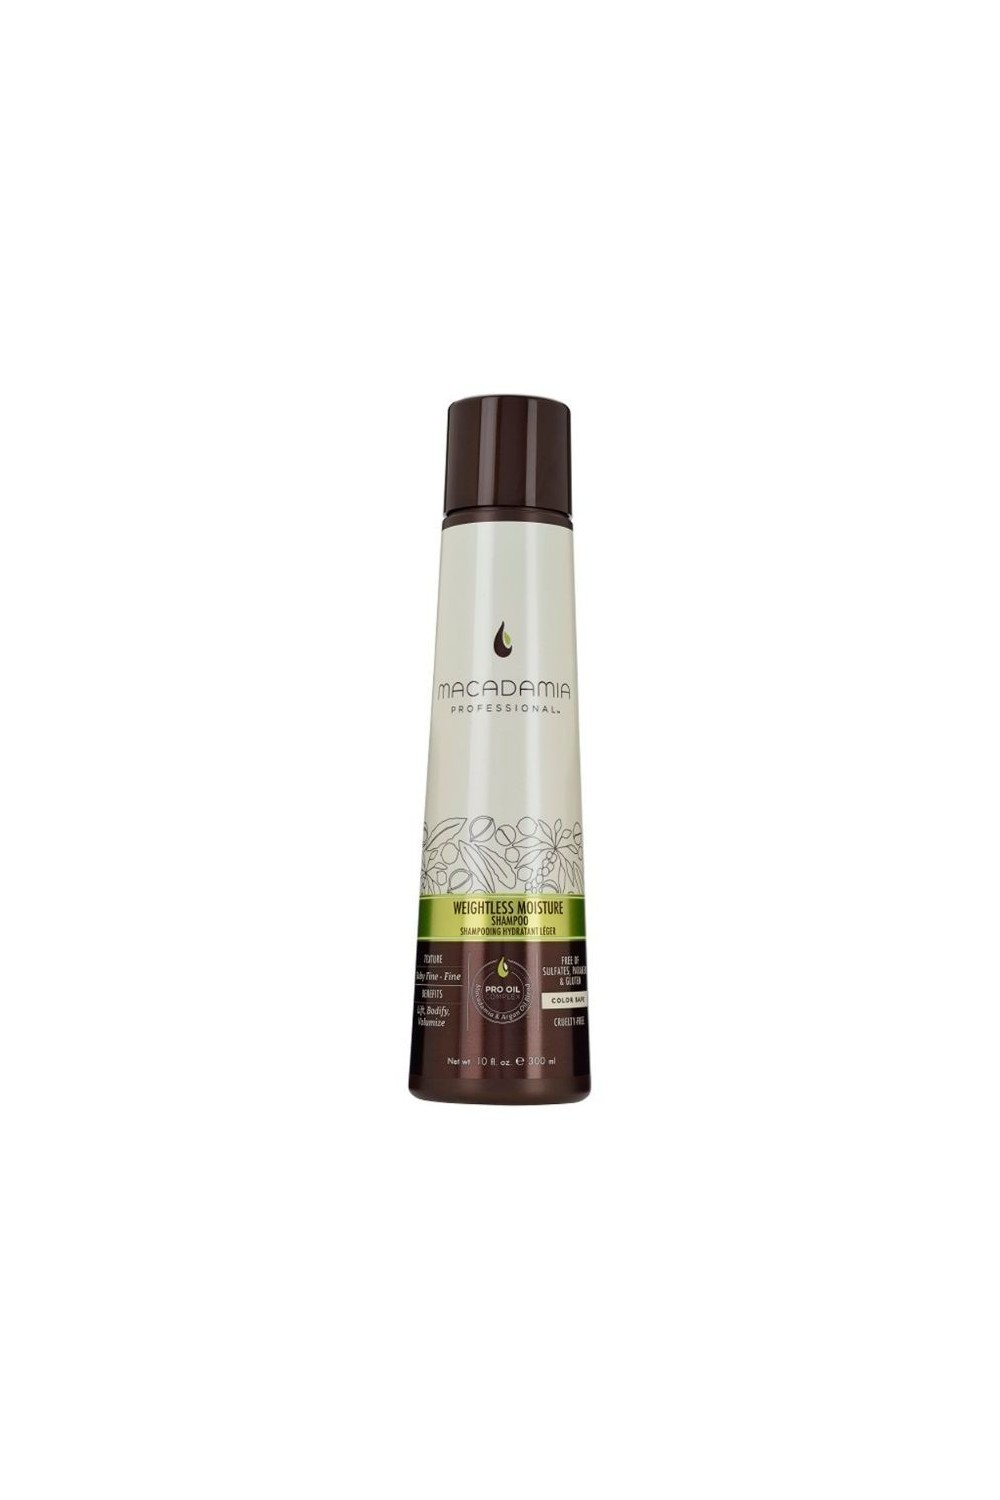 MACADAMIA NATURAL OIL - Macadamia Weightless Moisture shampoo 300ml